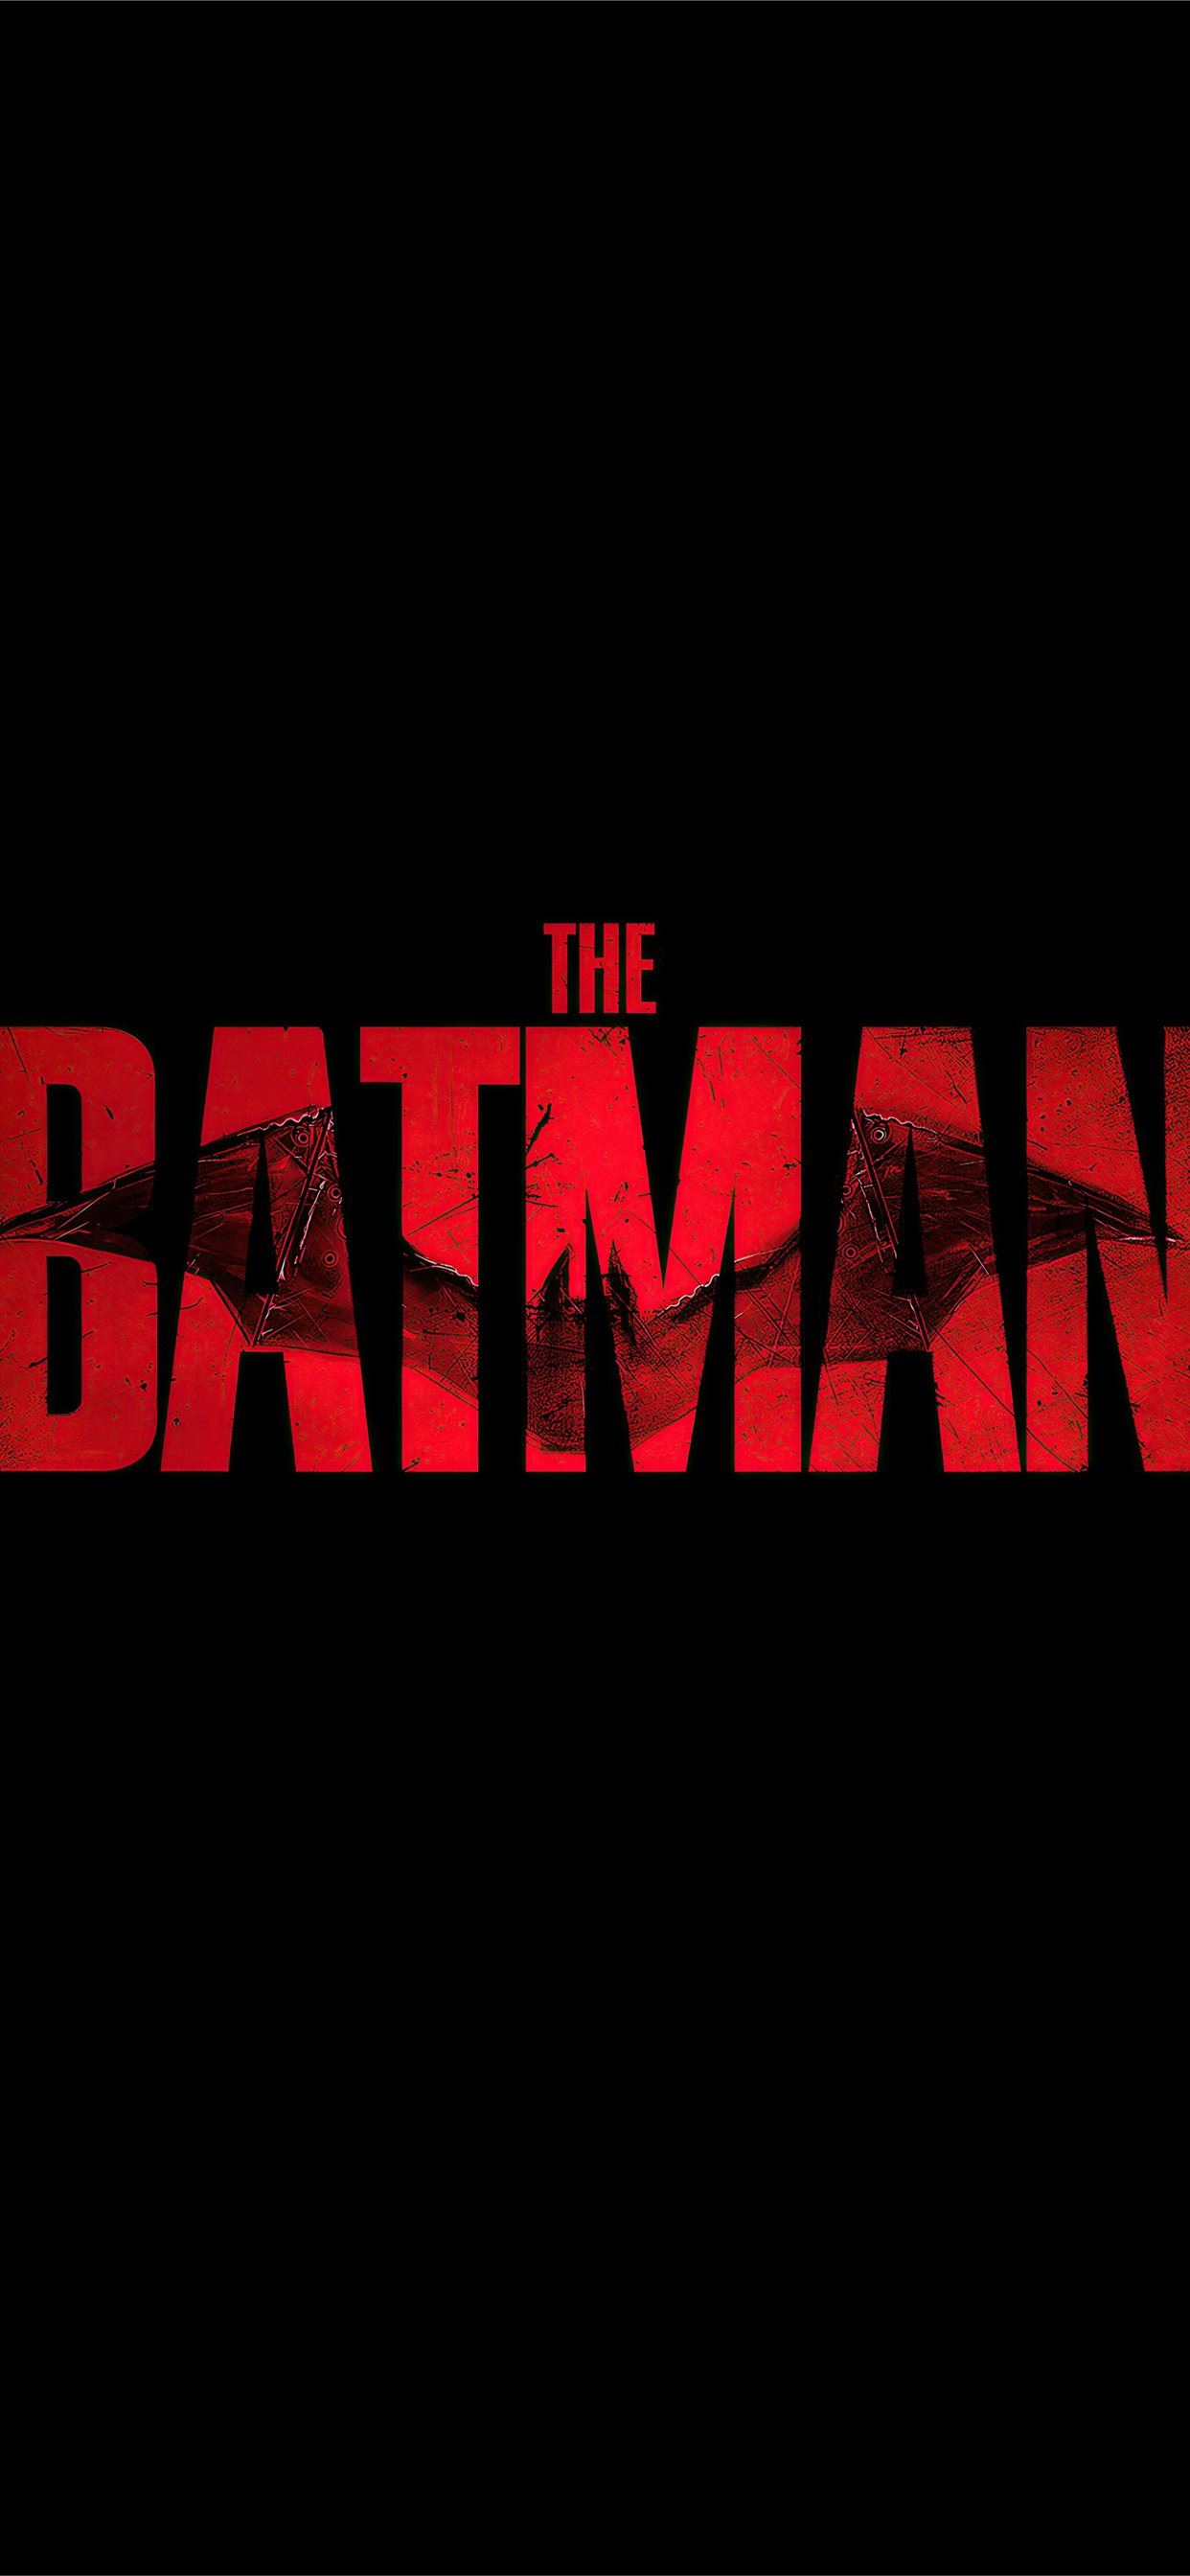 The Batman Logo 8k iPhone X Wallpaper